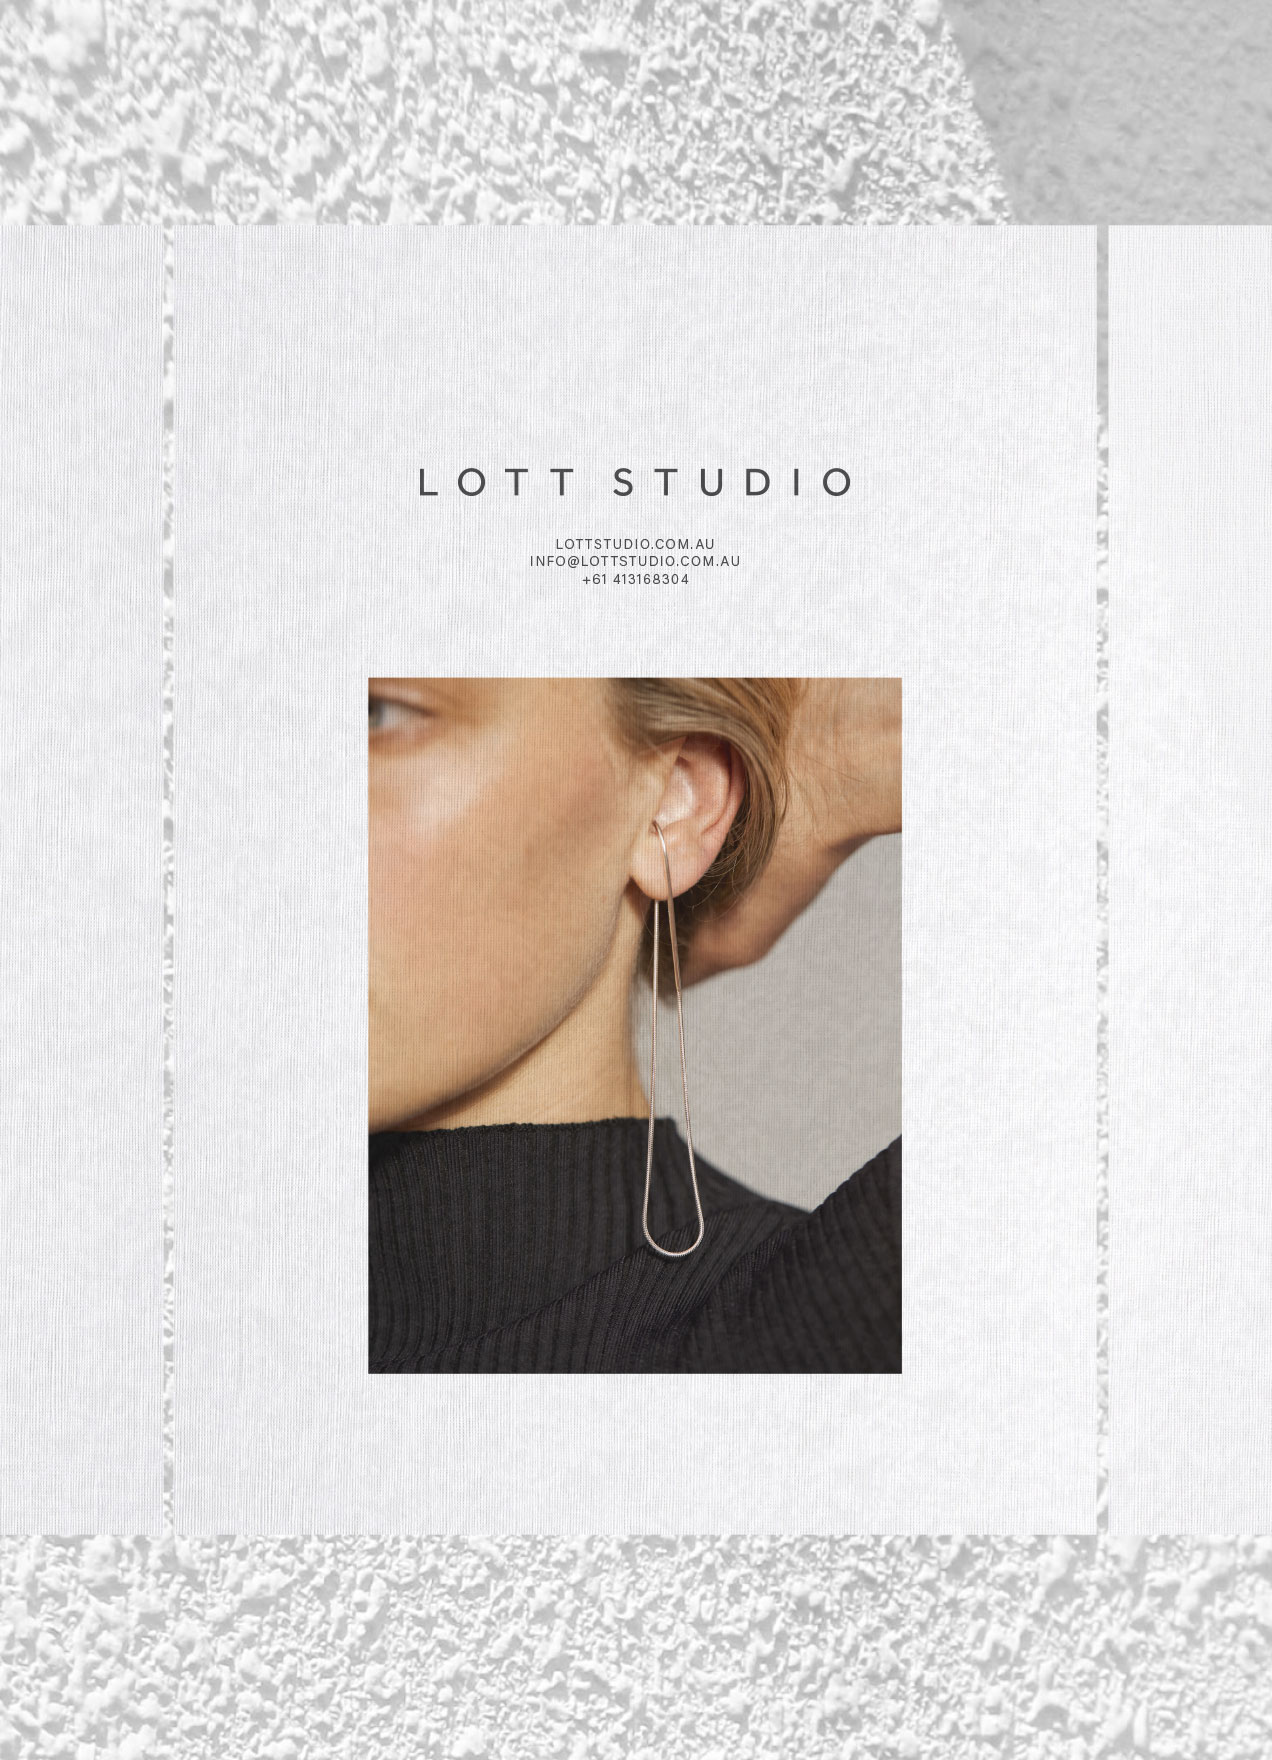 Lott Studio